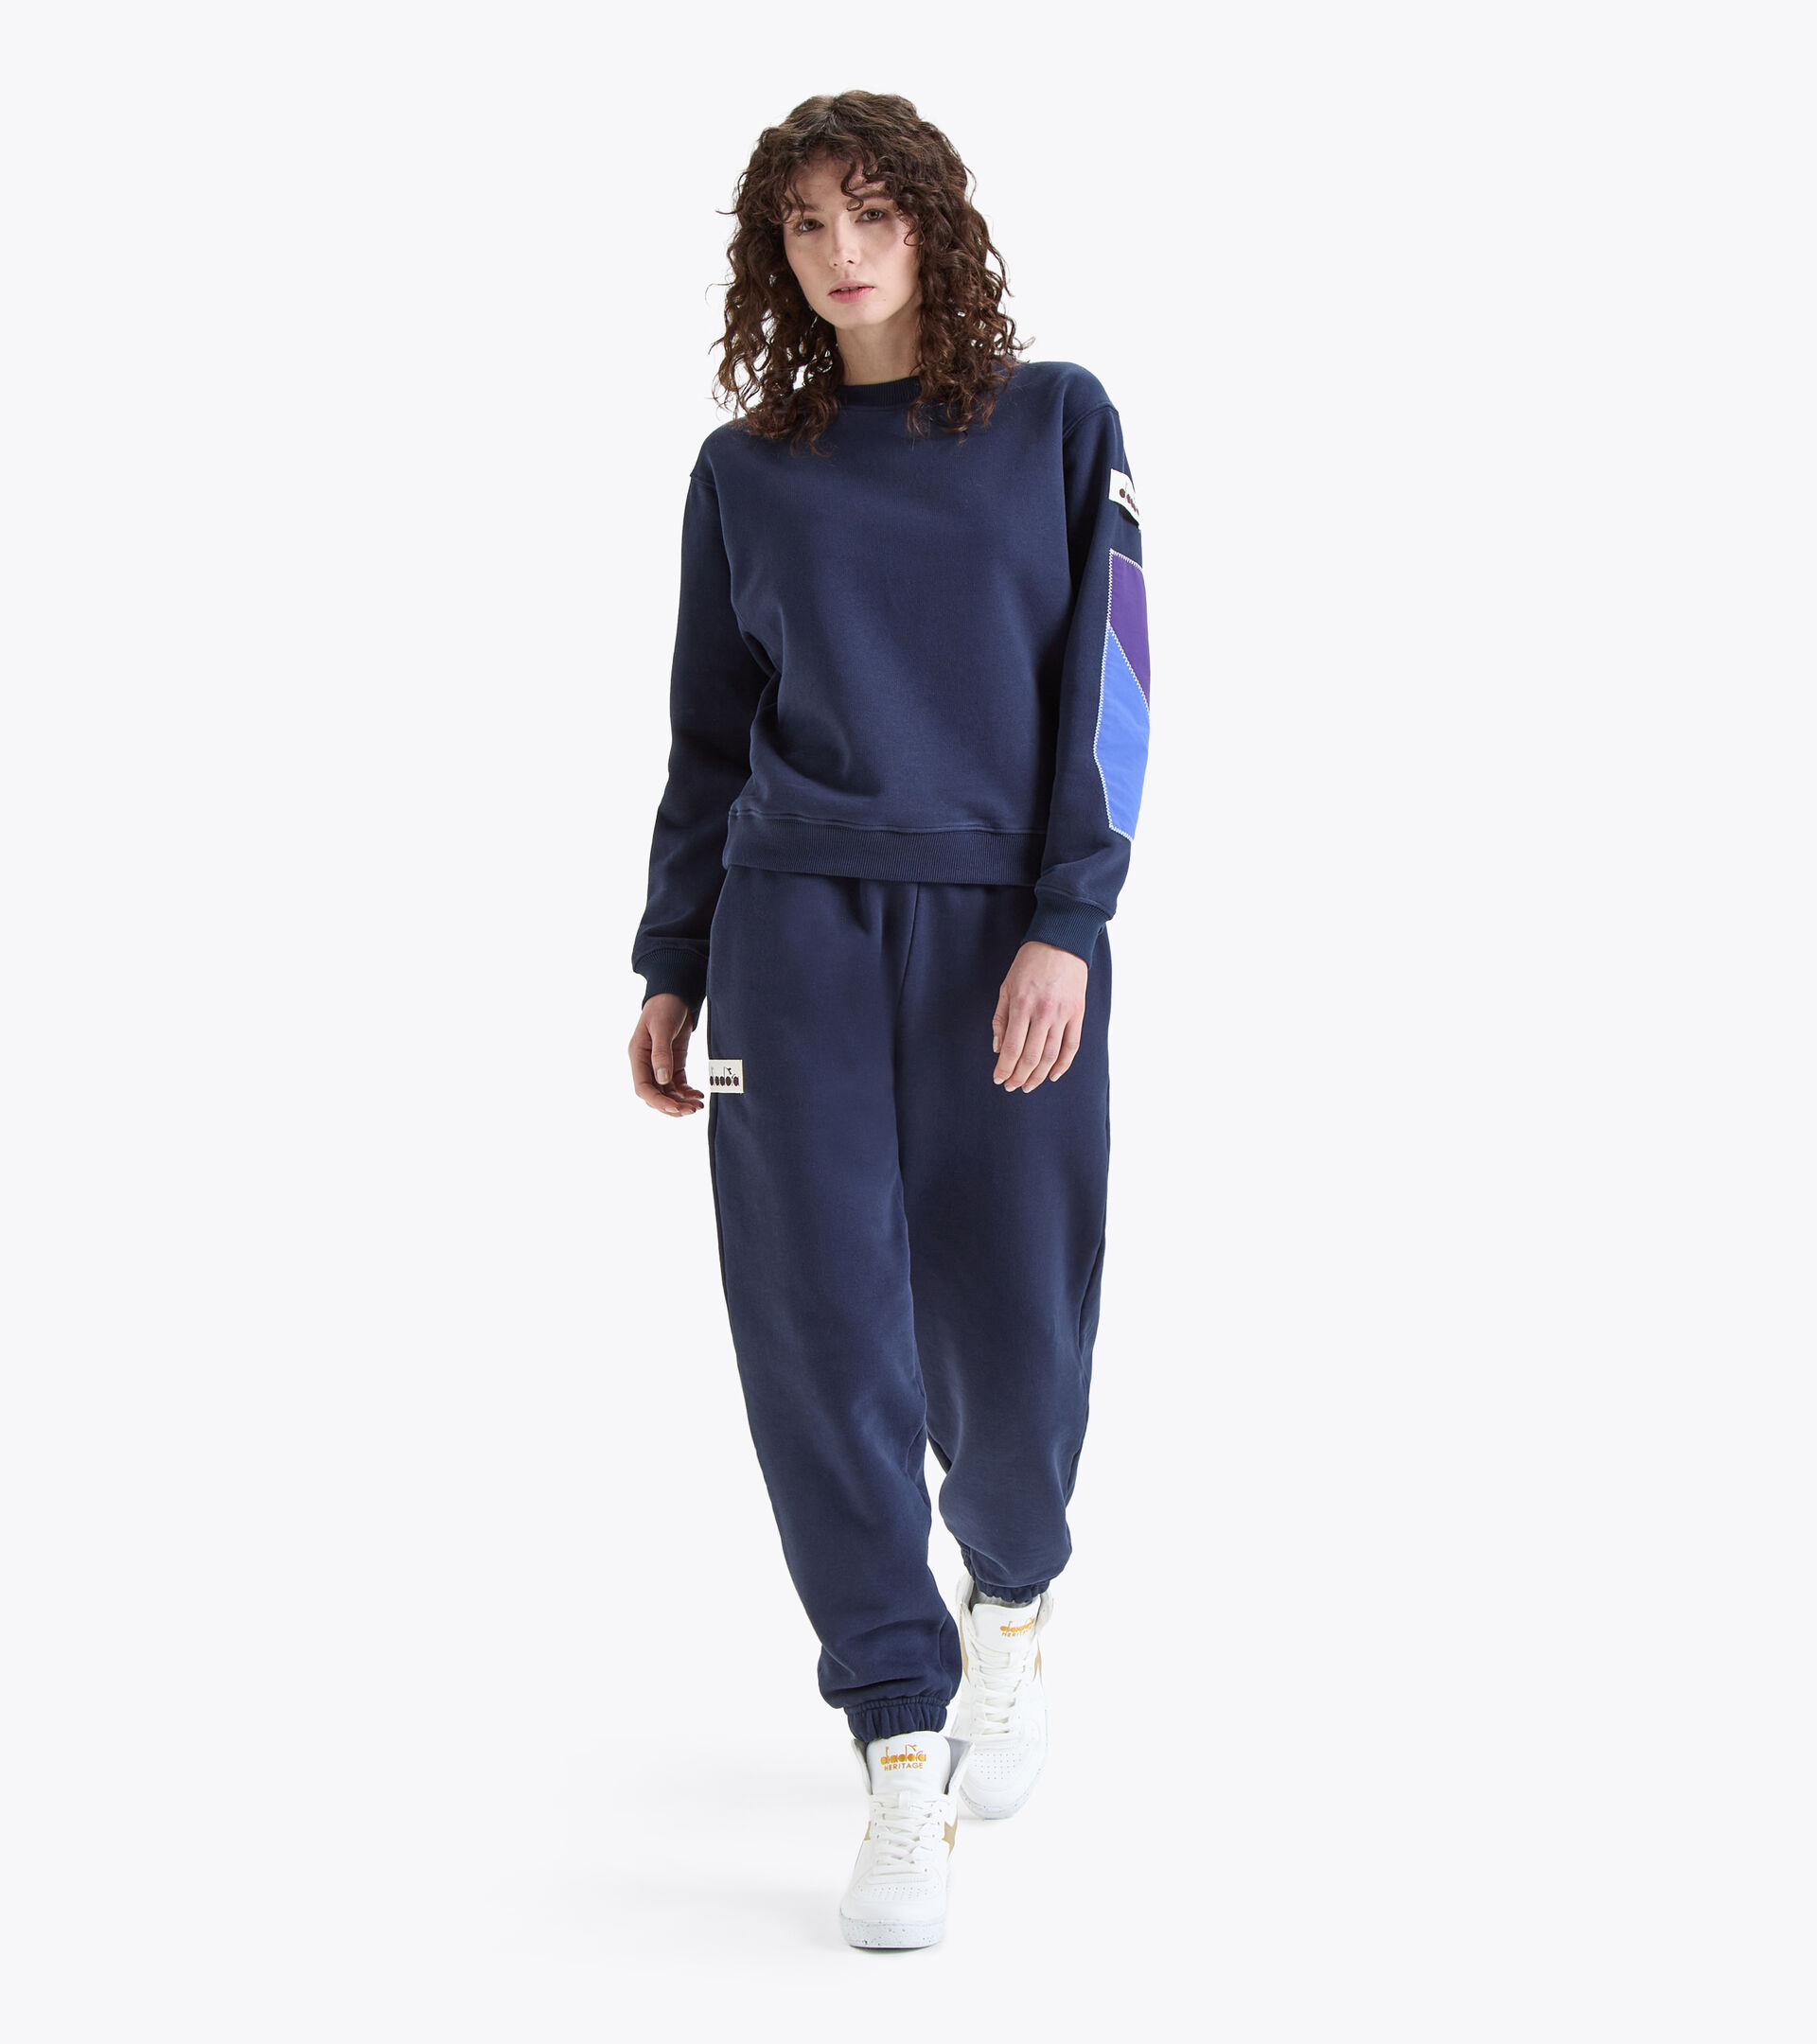 Sweatpants Made in Italy 2030 - Women  L. PANT 2030 BLUE CORSAIR - Diadora